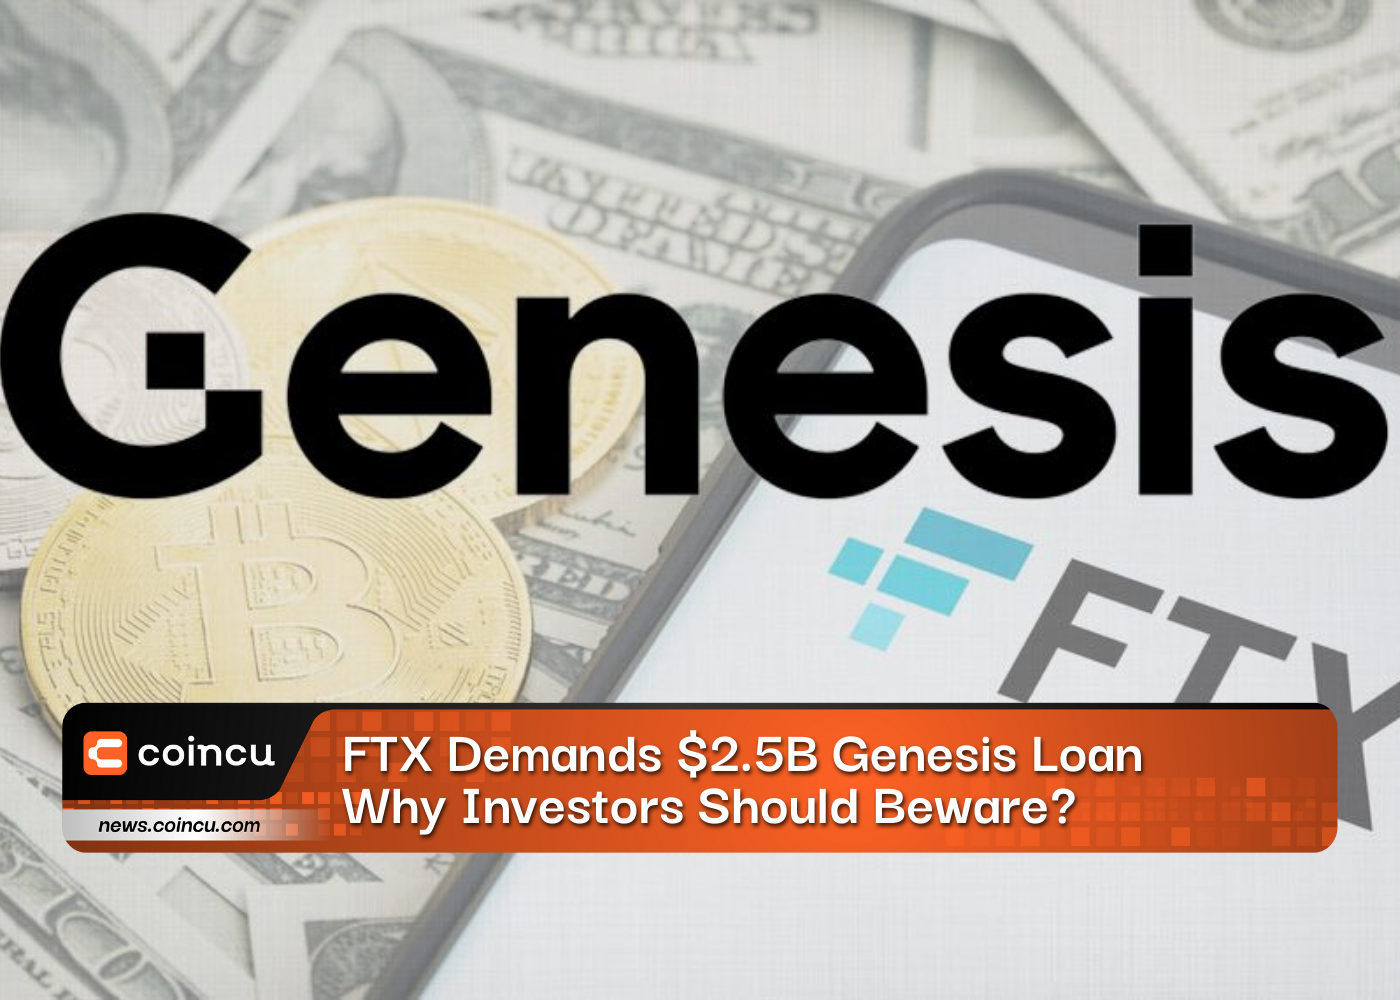 FTX Demands 2.5B Genesis Loan